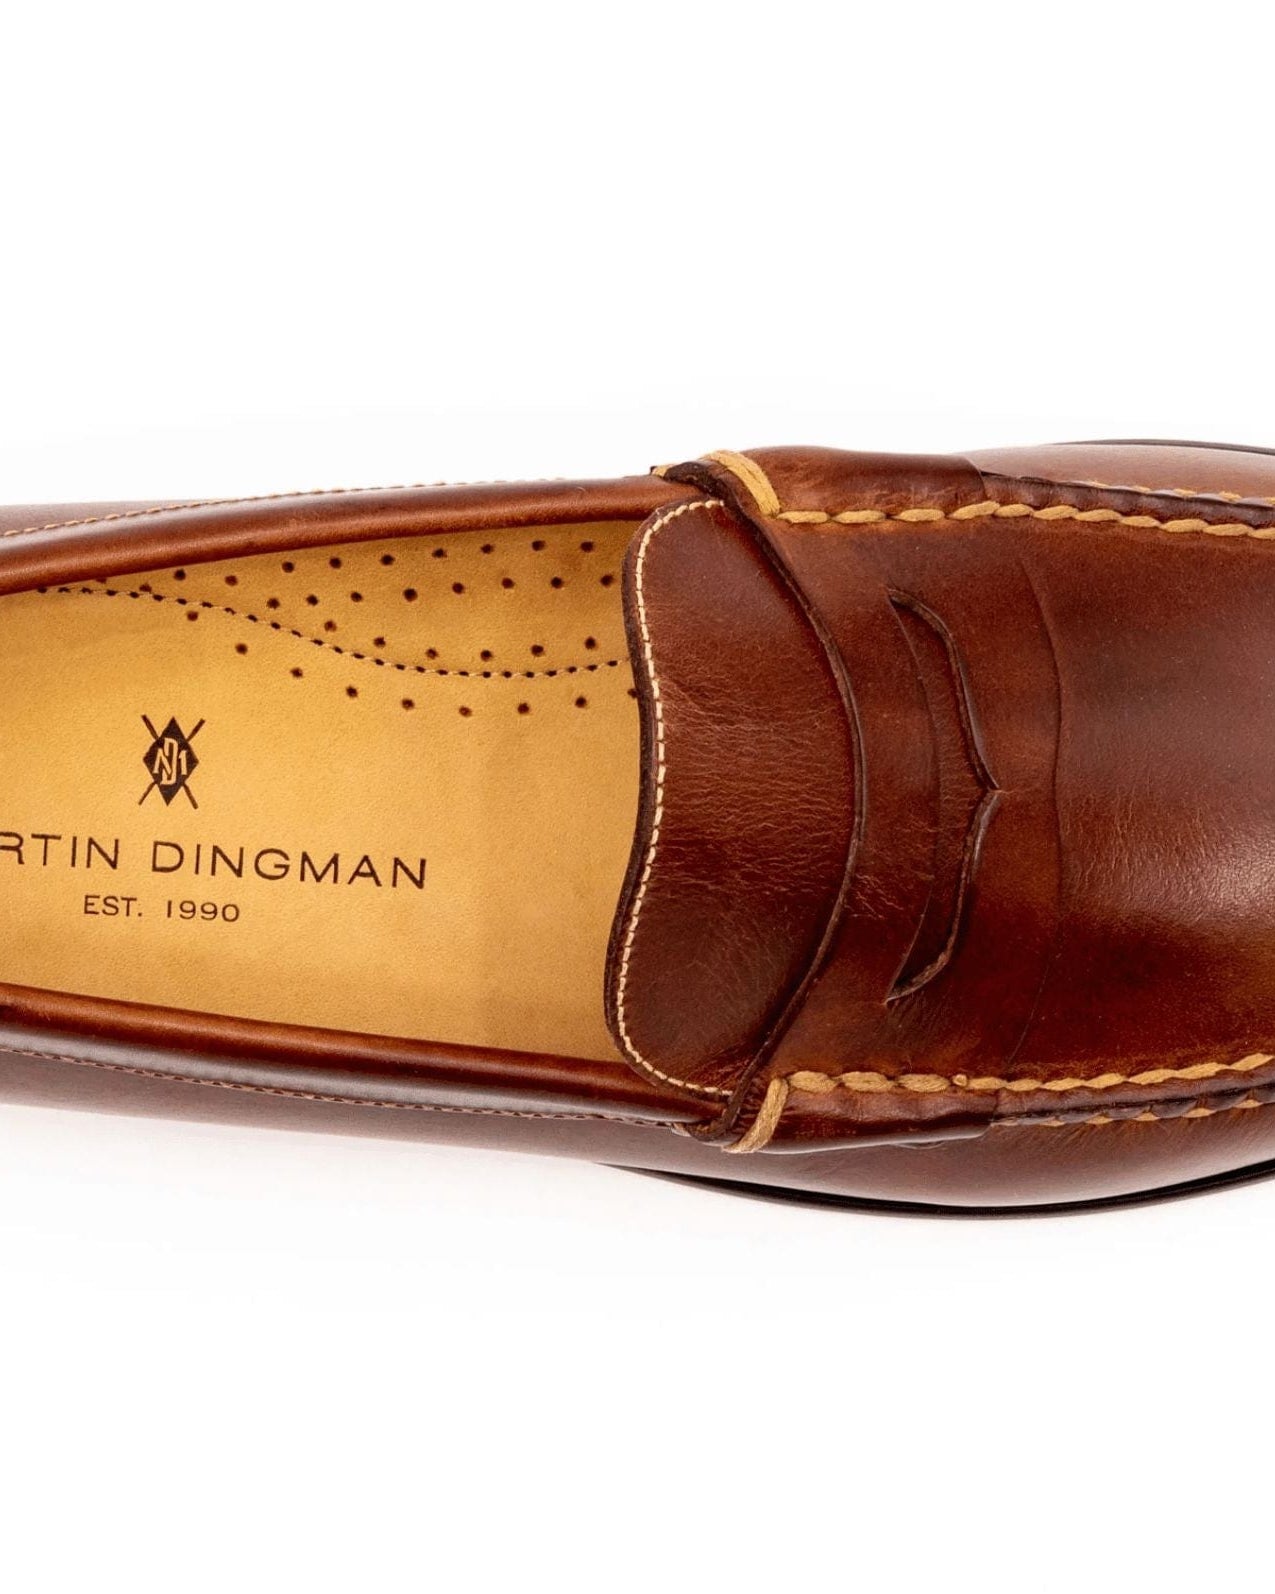 Martin Dingman Men's Shoes Martin Dingman Old Row Penny - Cigar